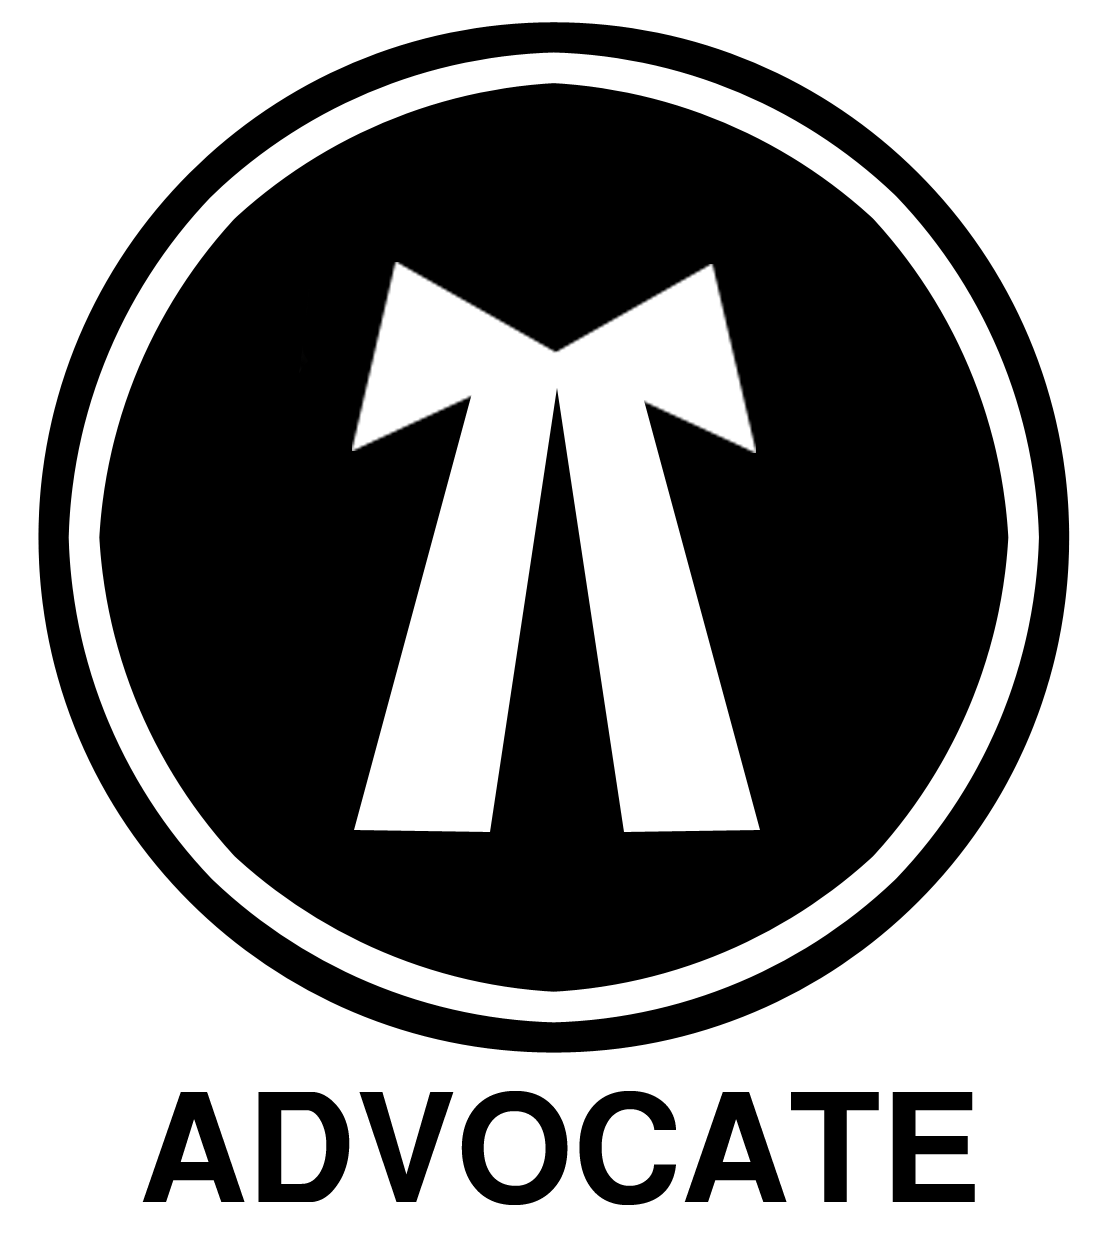 Lawyer Logo - Gag's space: Advocate symbol / logo / image | CICLAVIA | Pinterest ...